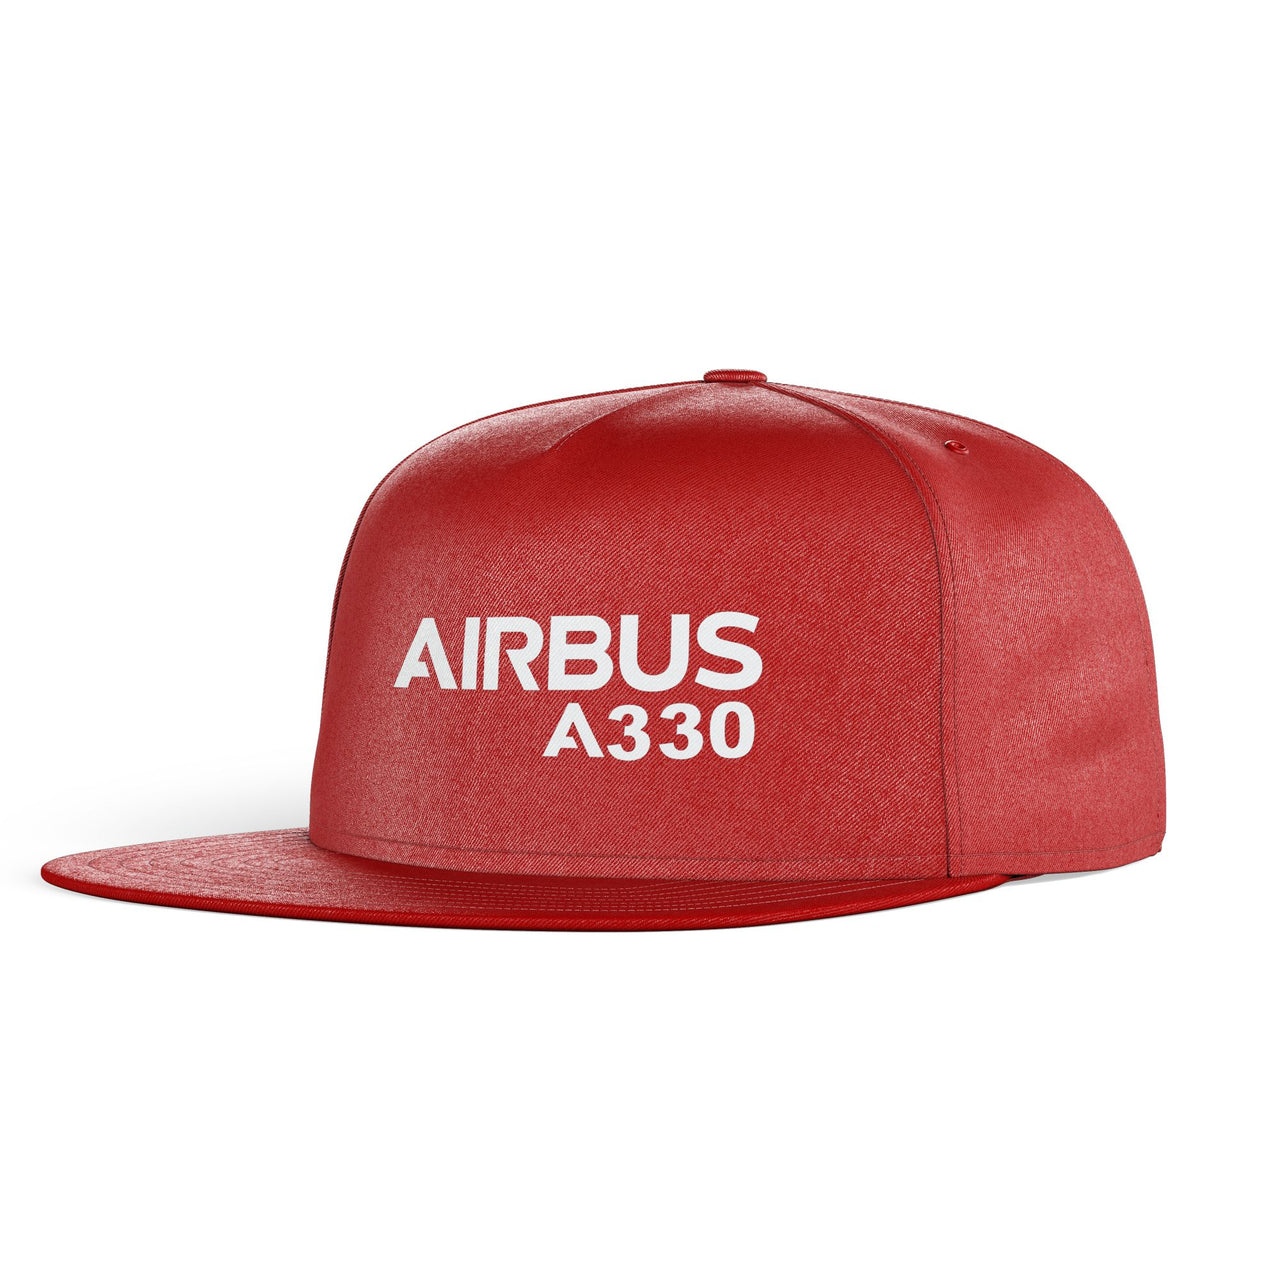 Airbus A330 & Text Designed Snapback Caps & Hats